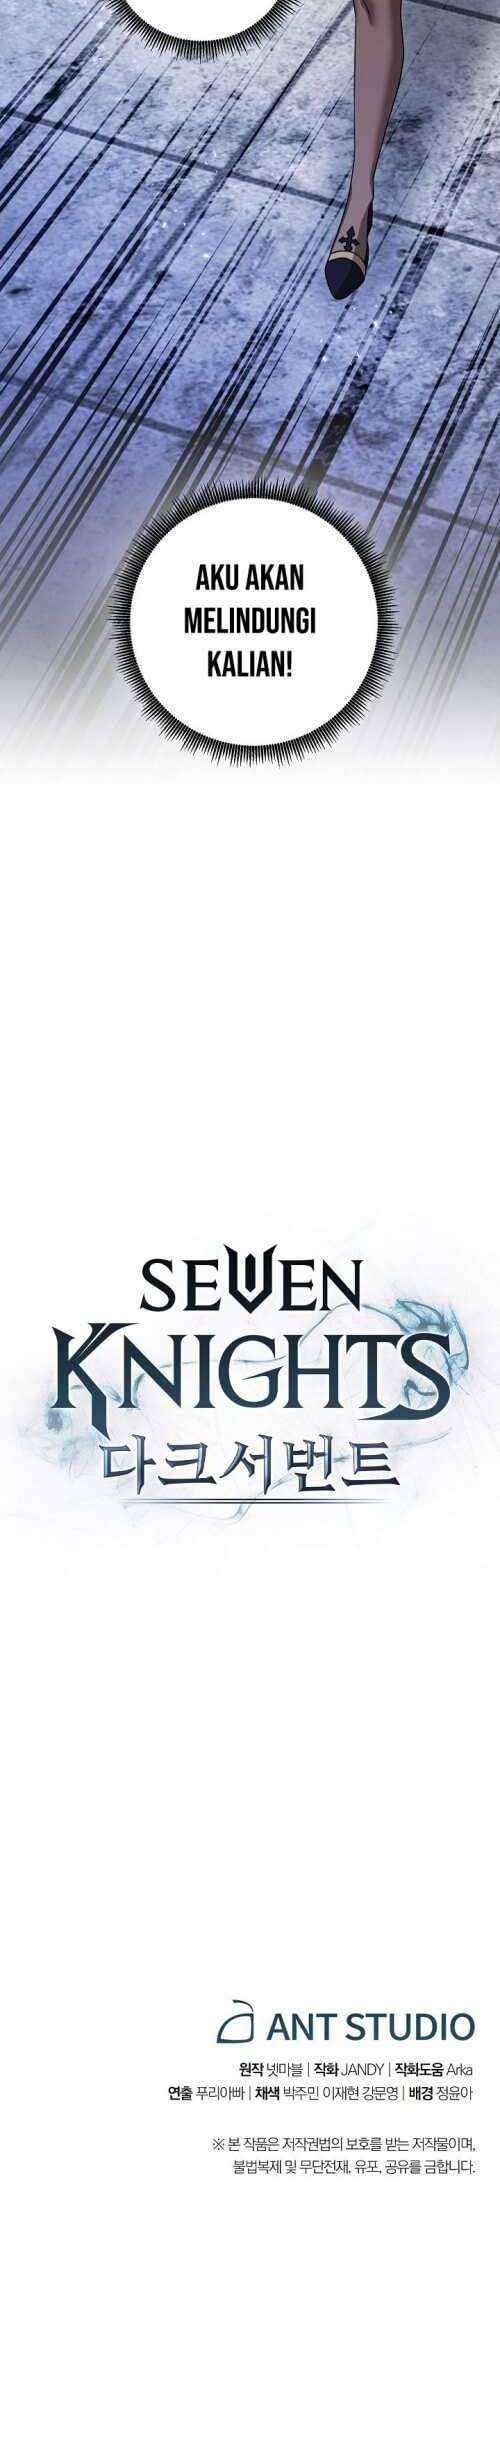 Seven Knights: Dark Servant Chapter 08